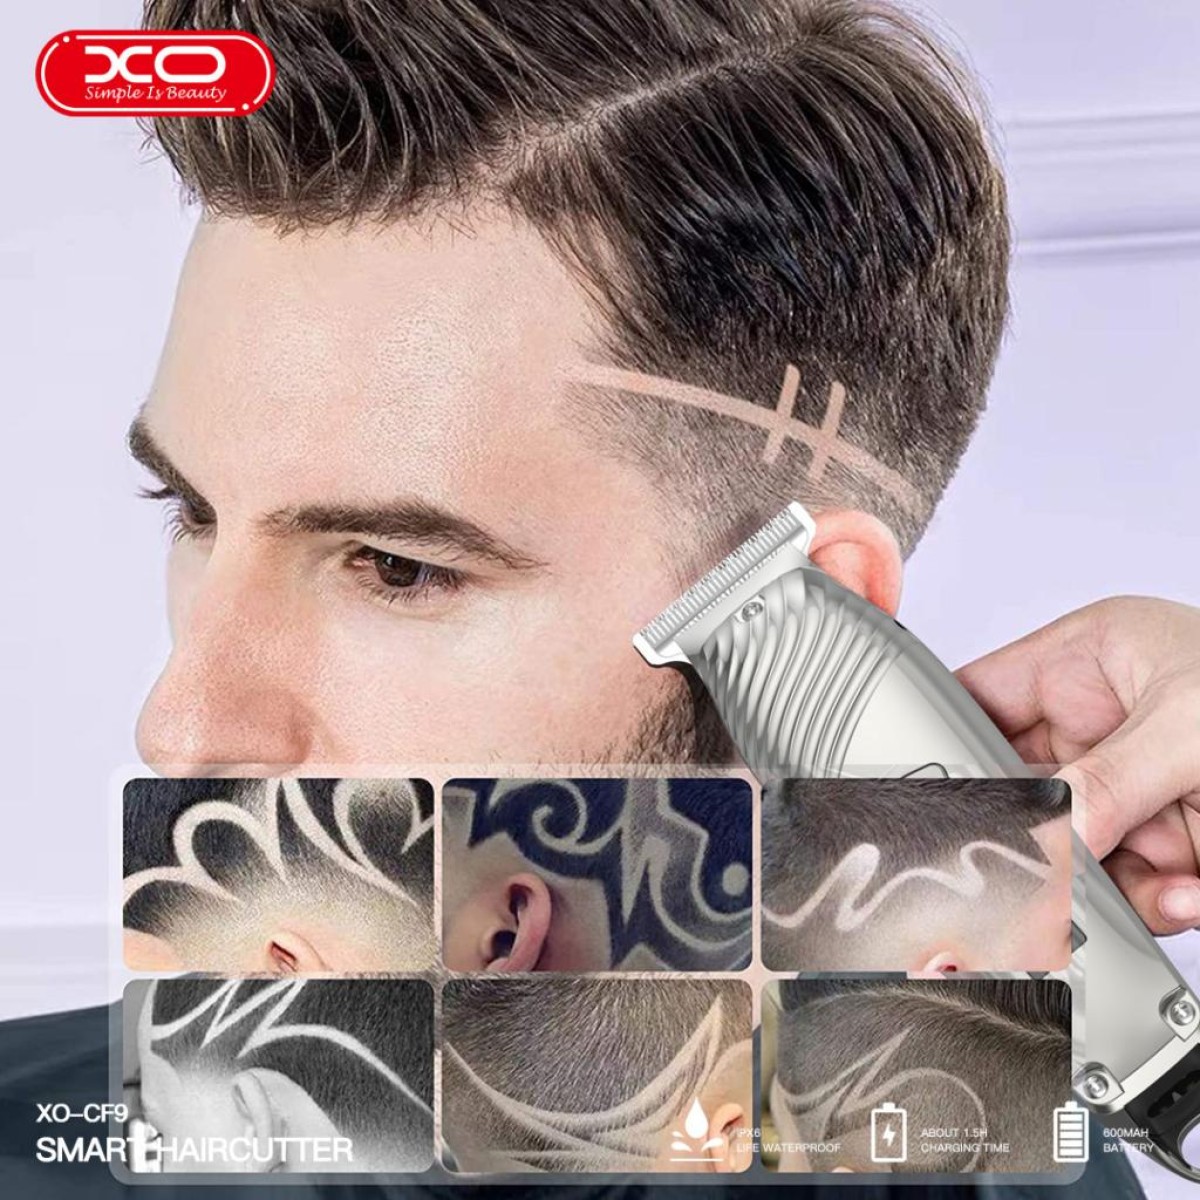 XO CF9 Digital Haircutting Scissors